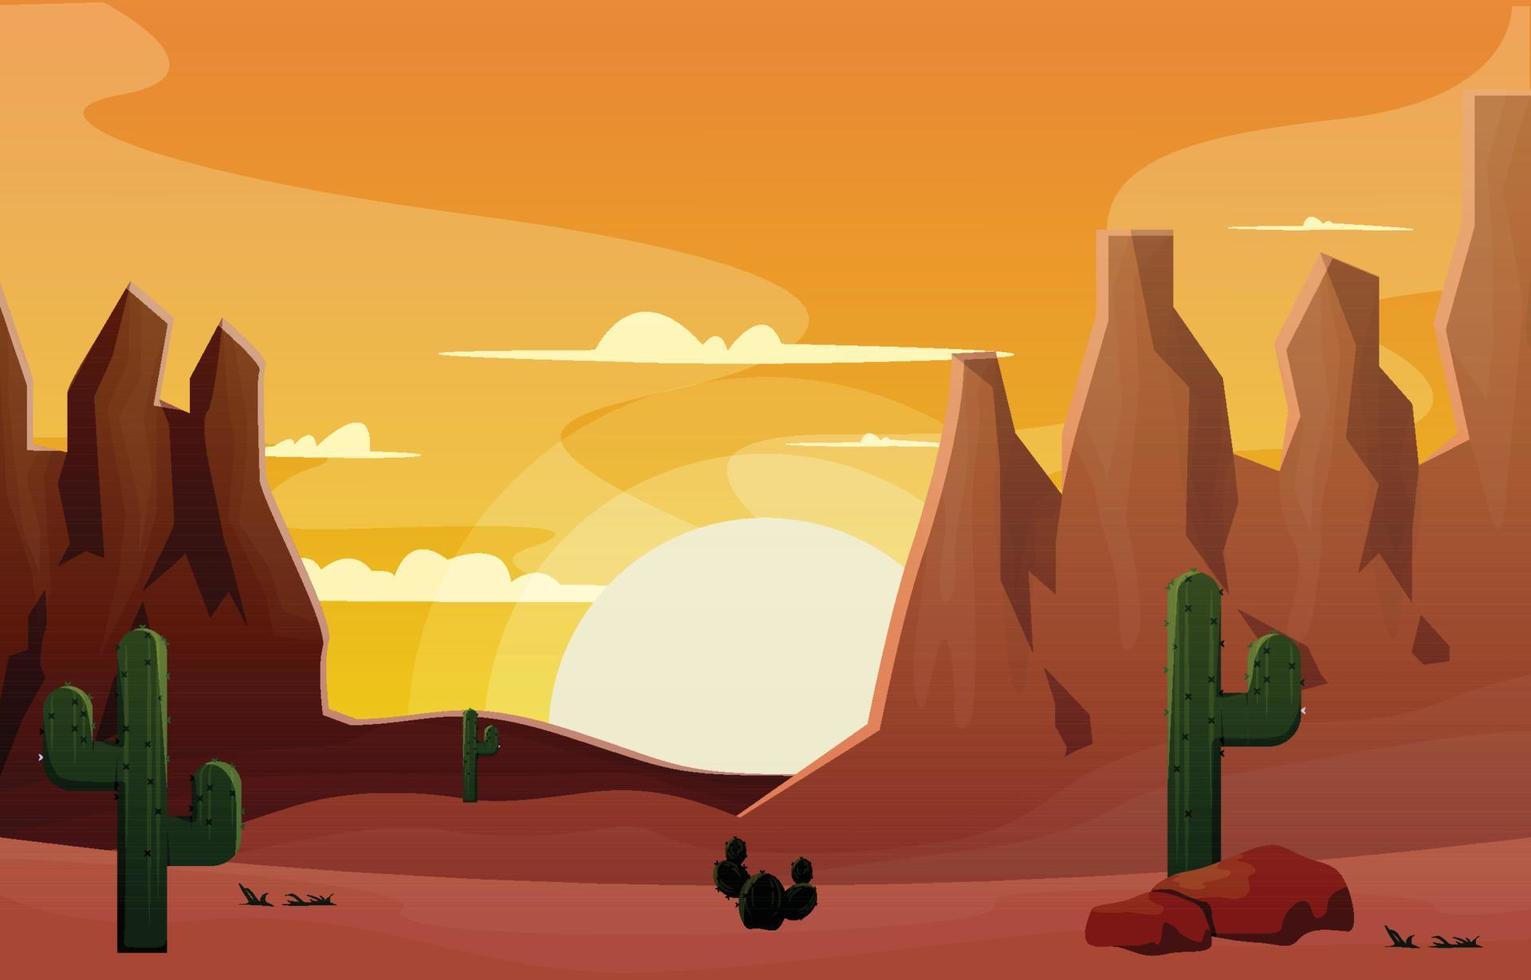 Sunrise Cliff Desert Country Cactus Travel Vector Flat Design Illustration